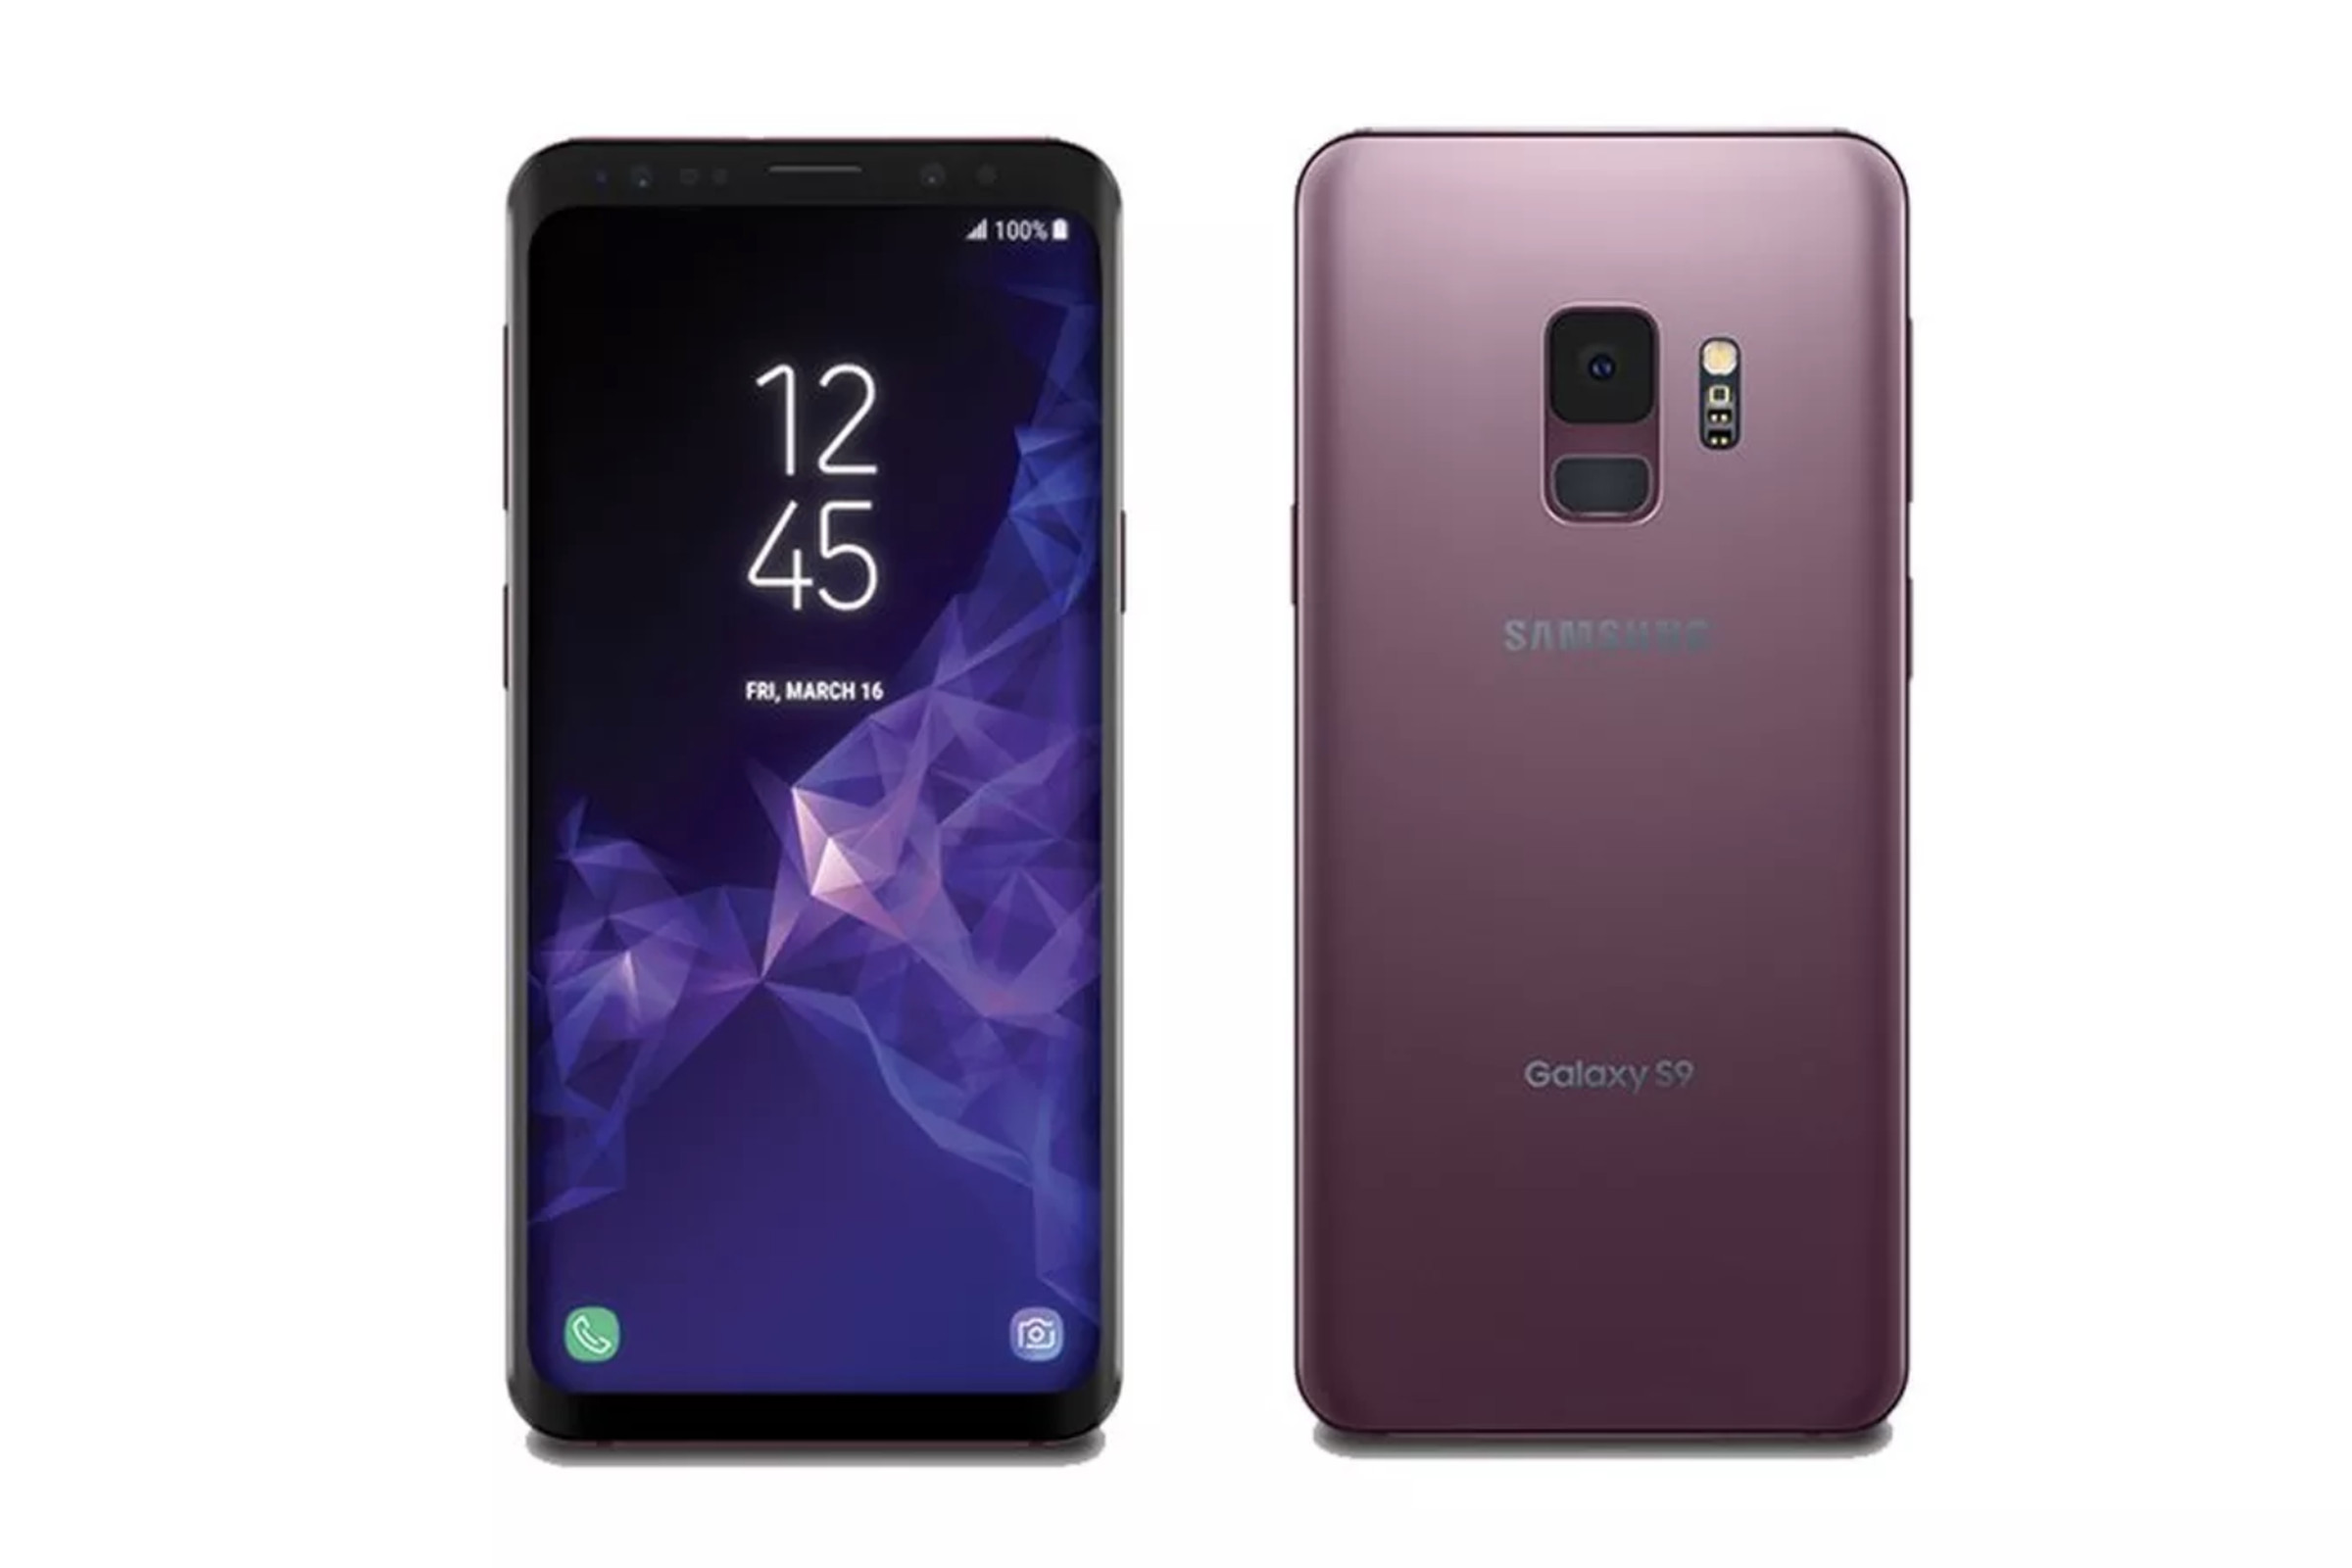 Samsung s9 11. Самсунг s9. Samsung Galaxy s9 Samsung. Телефон Samsung Galaxy s9. Самсунг галакси с 9.